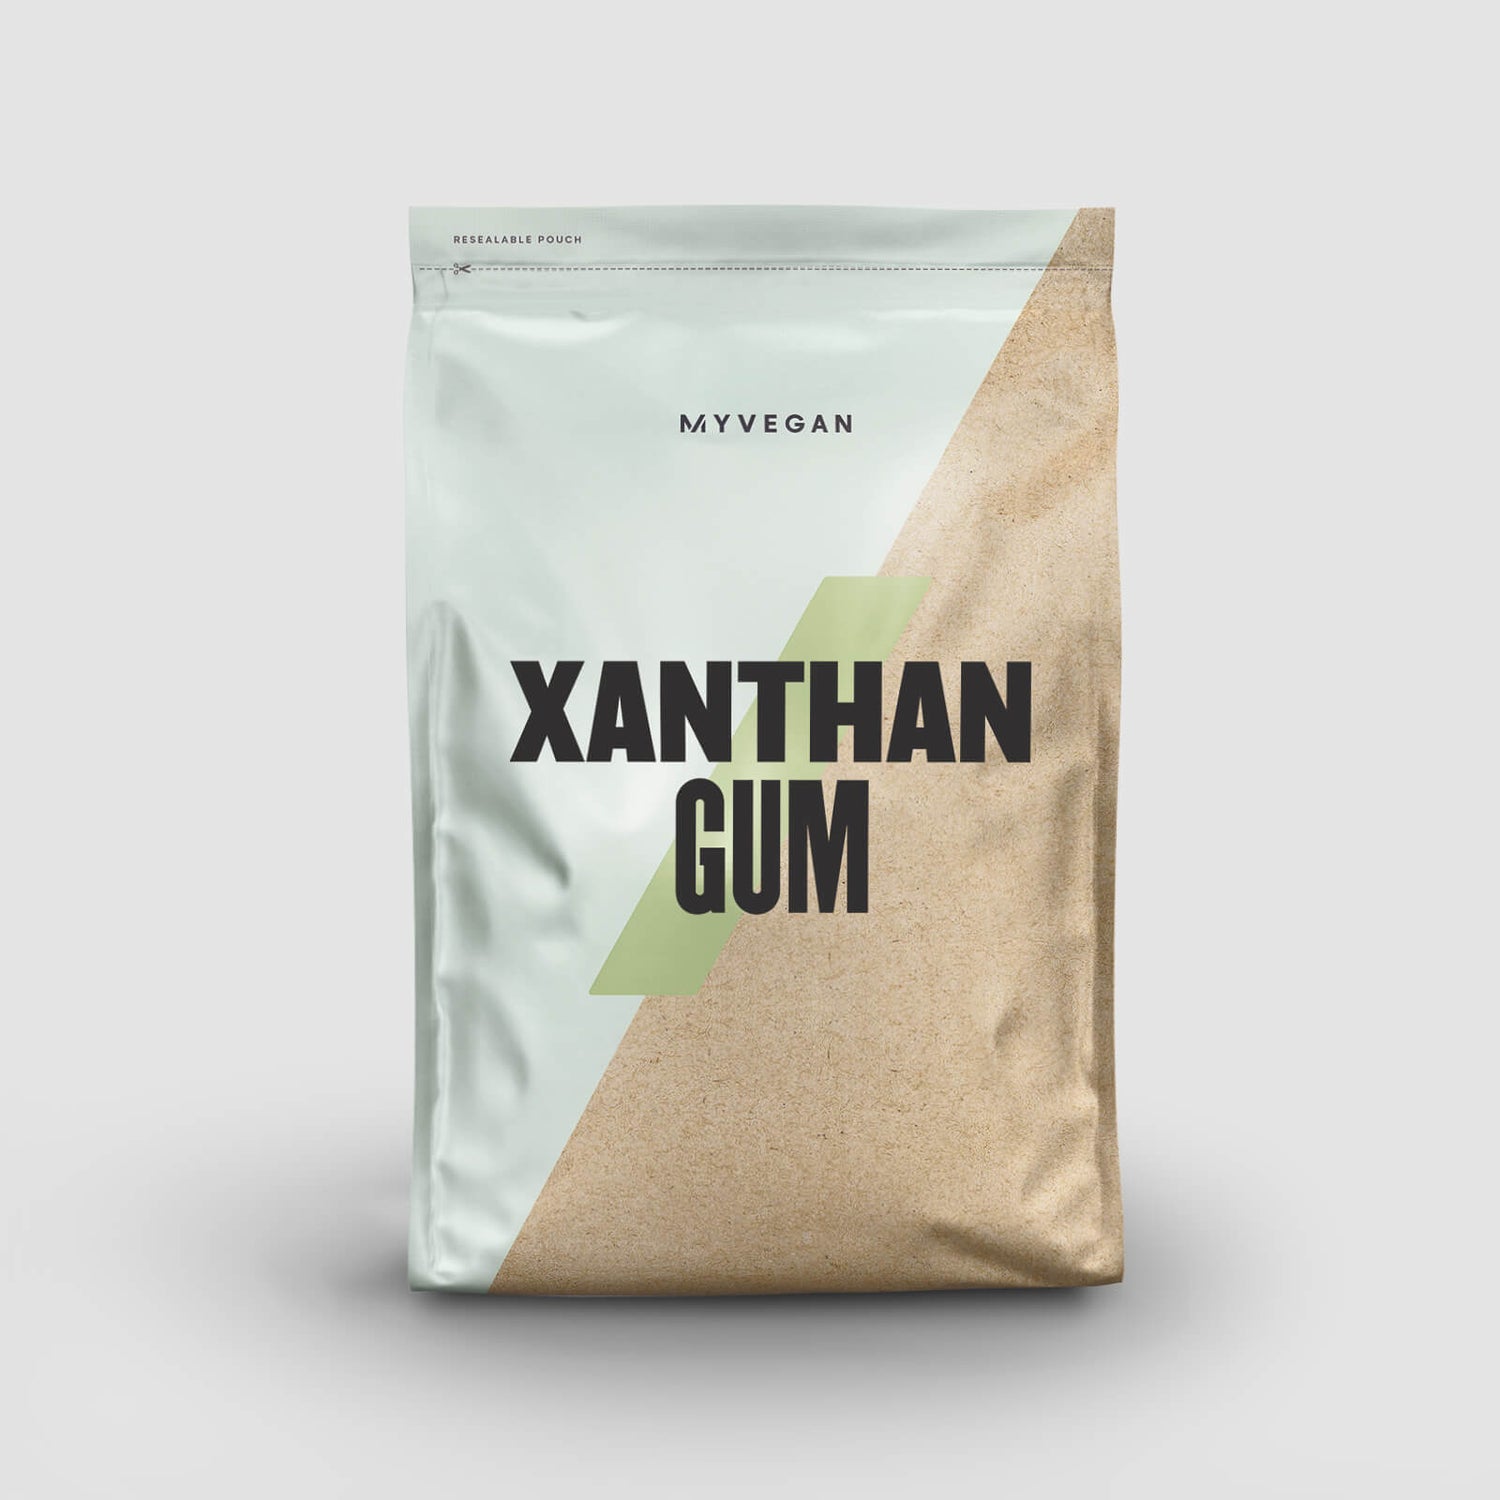 100% Xanthan Gum